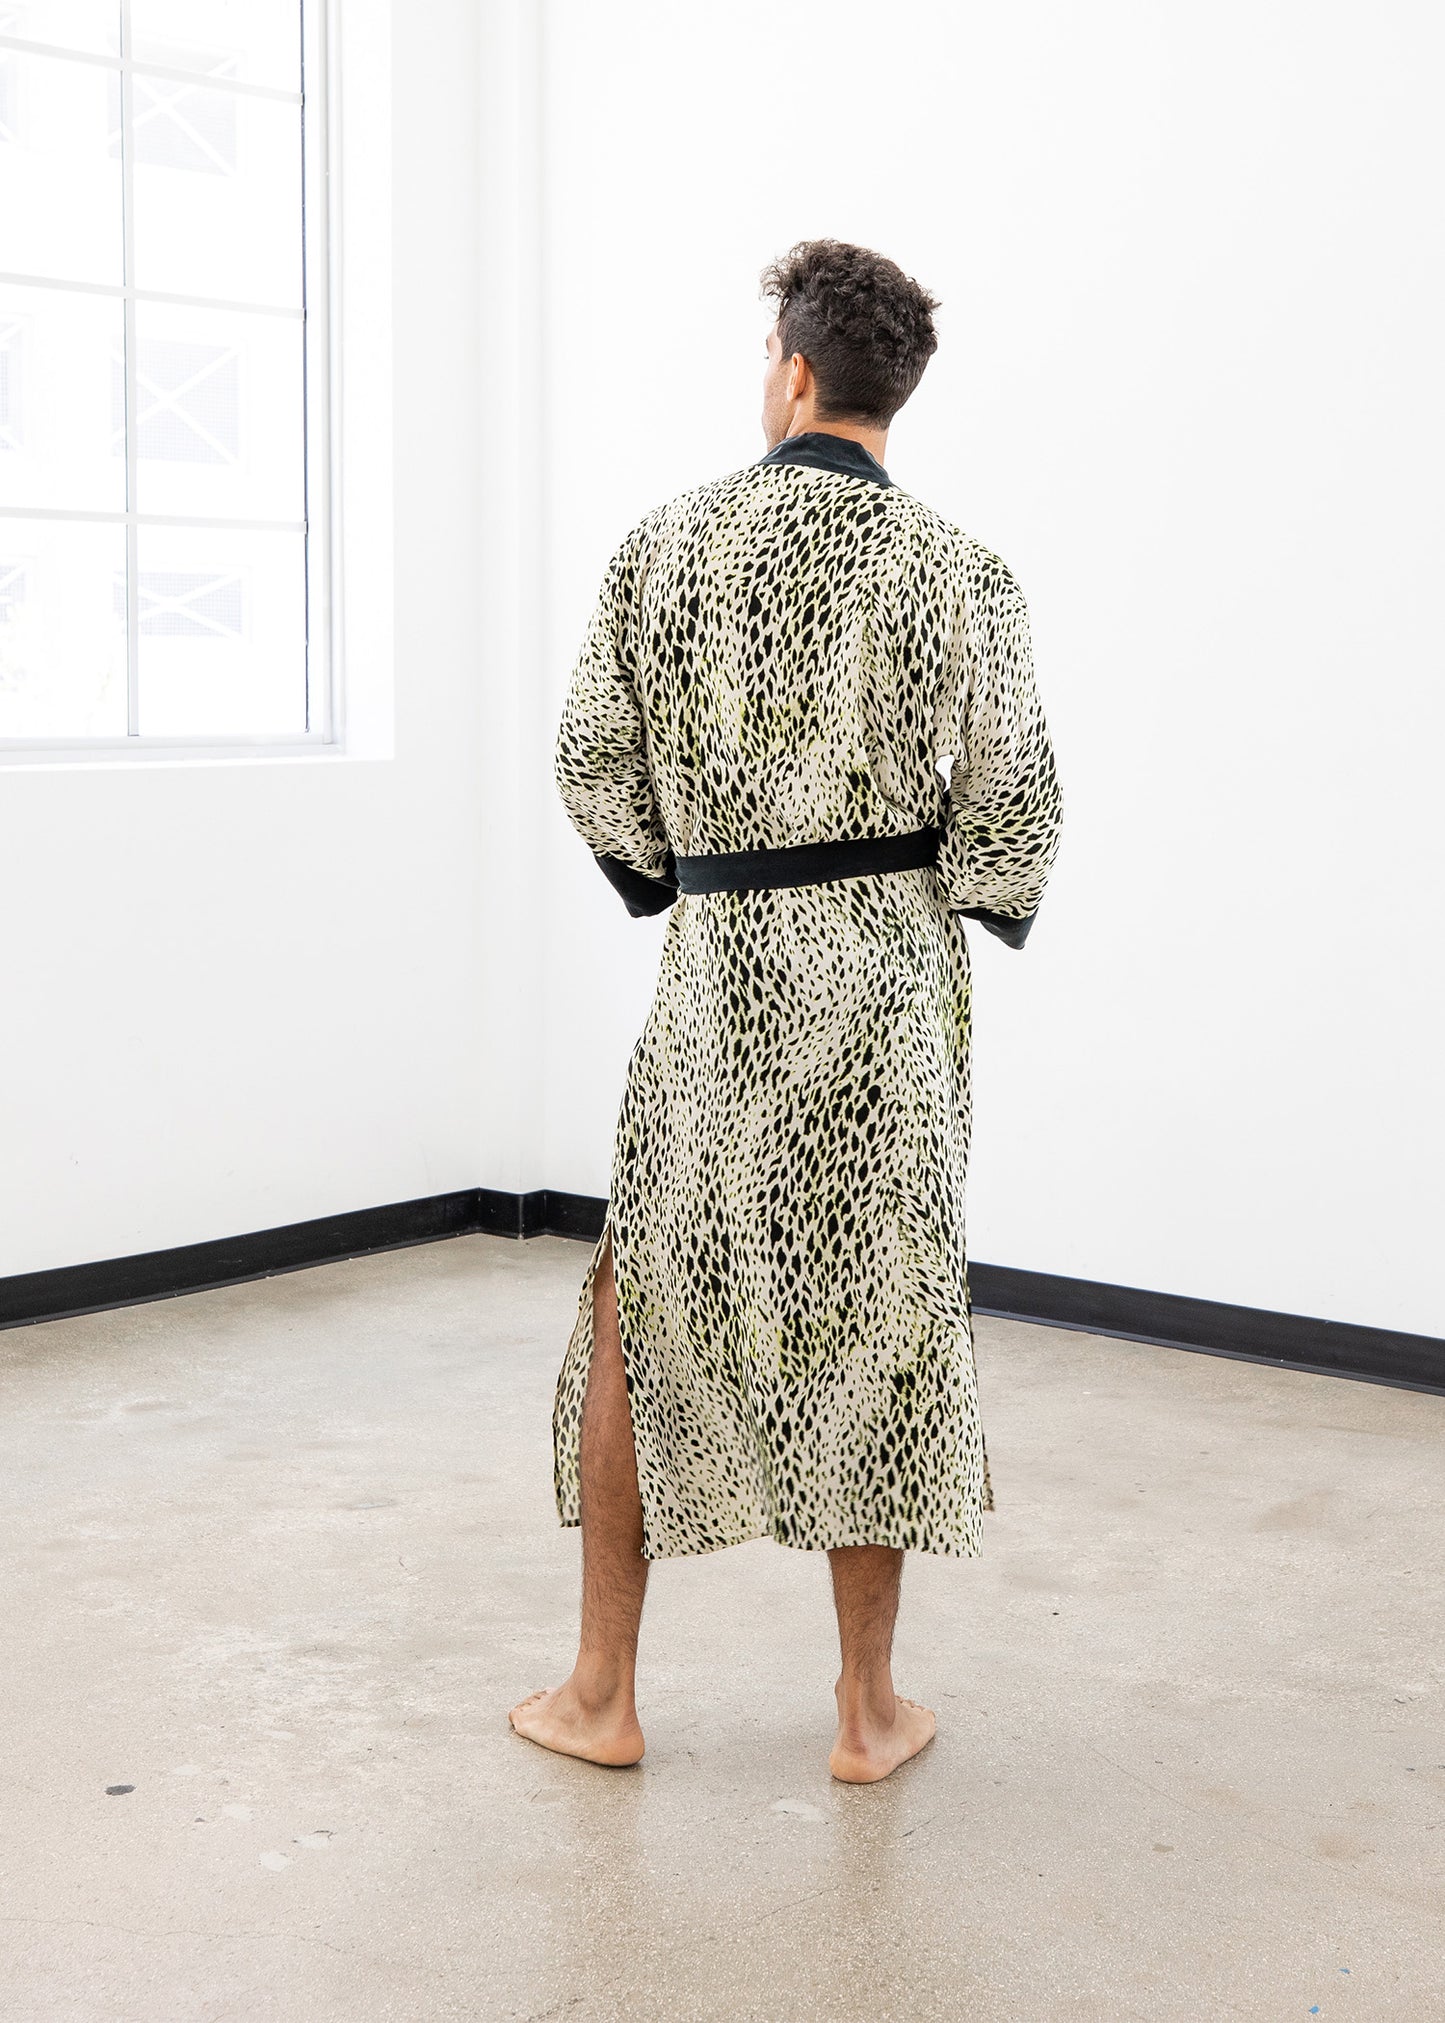 Men's Kimono Robe